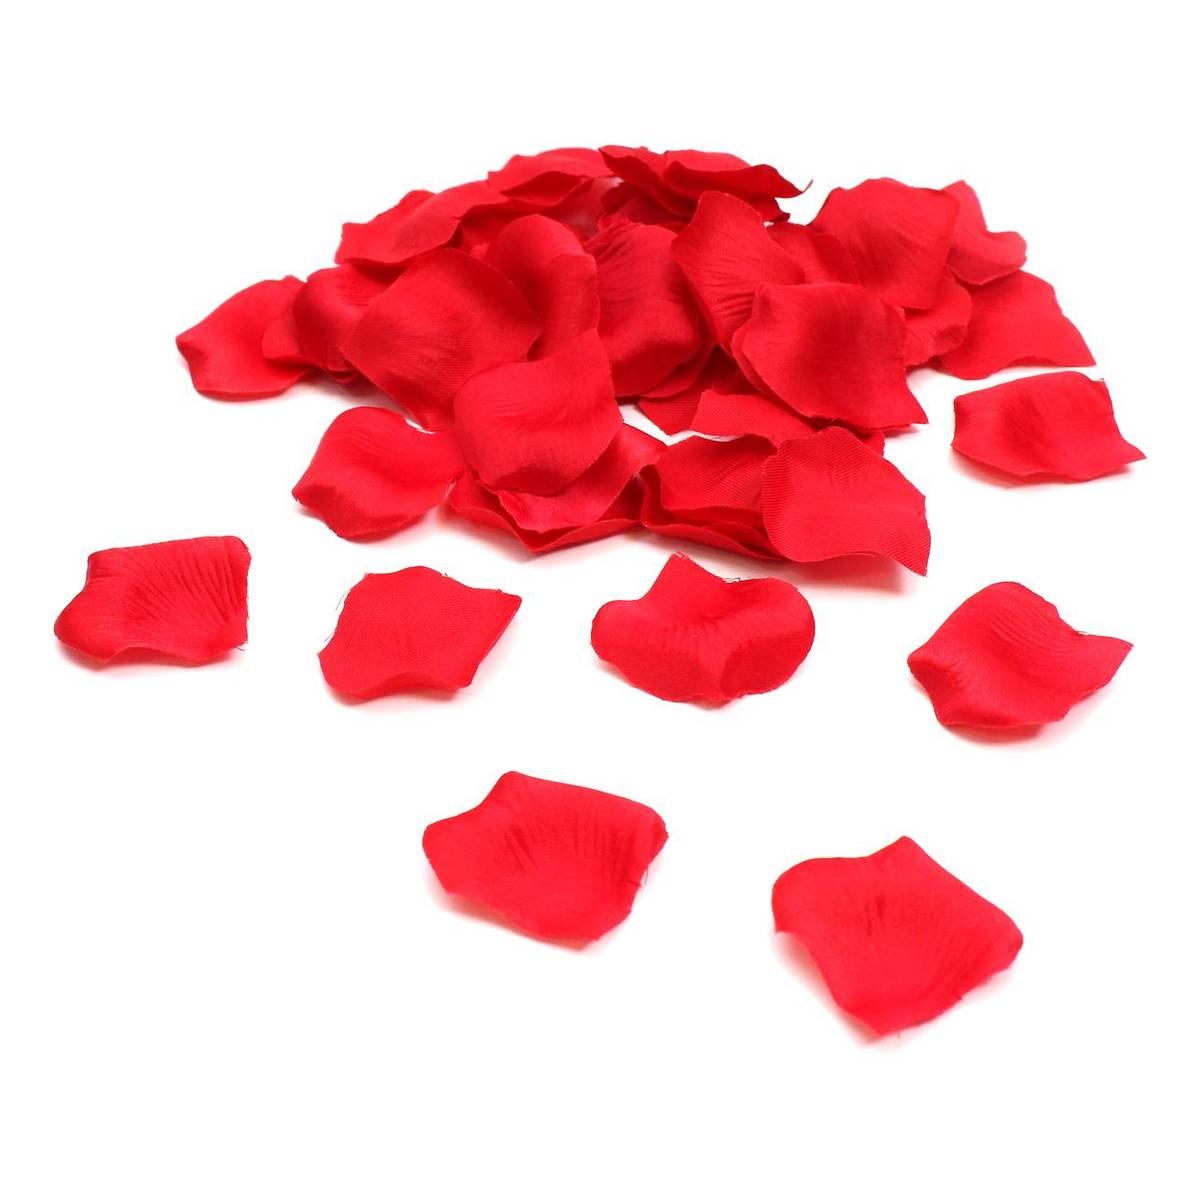 Red Rose Petal Confetti 500 Pieces